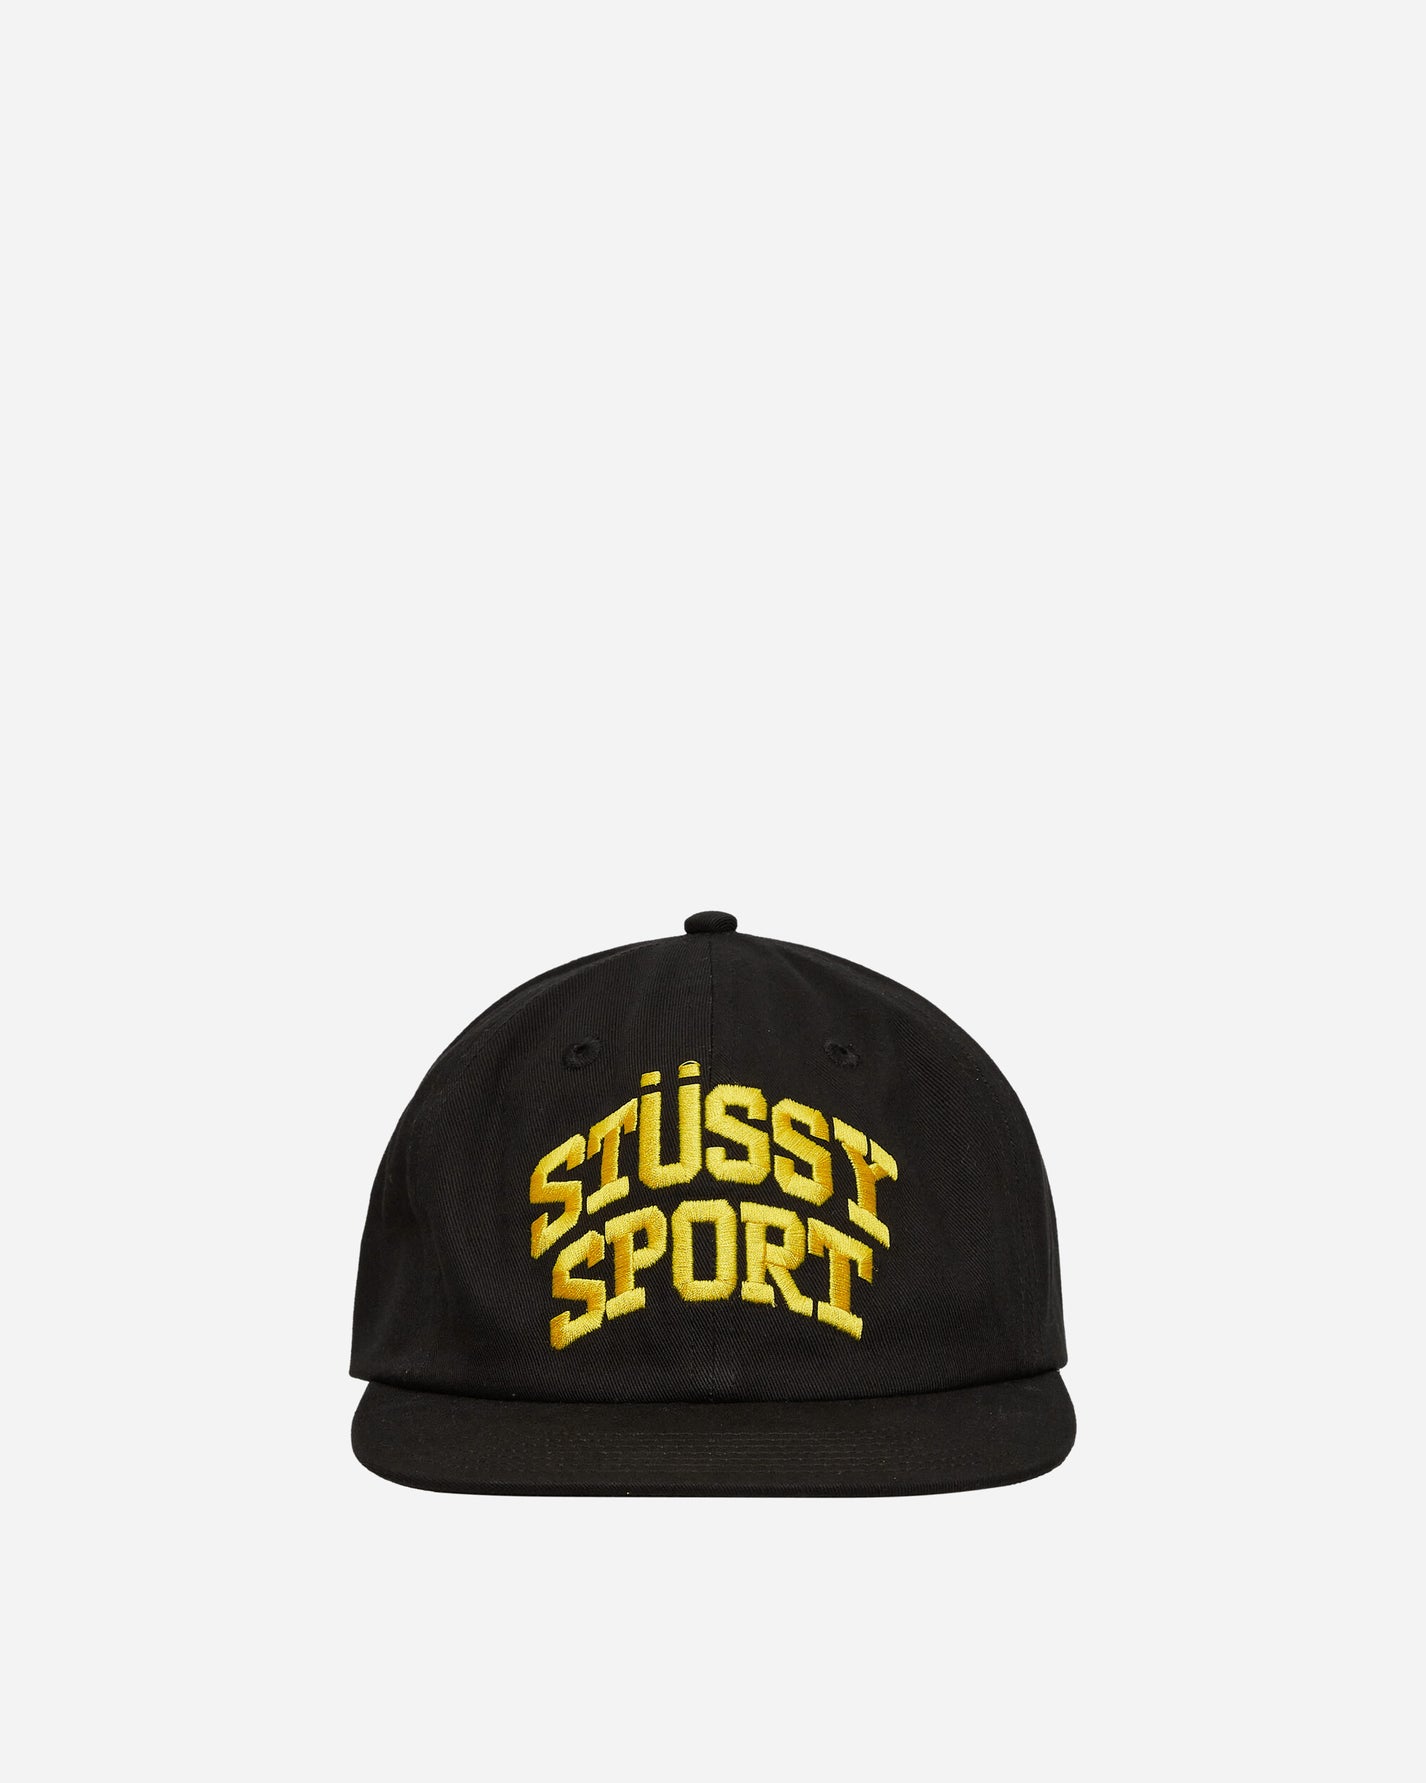 Stüssy Stussy Sport Cap Anthracite Hats Caps 1311101 2397